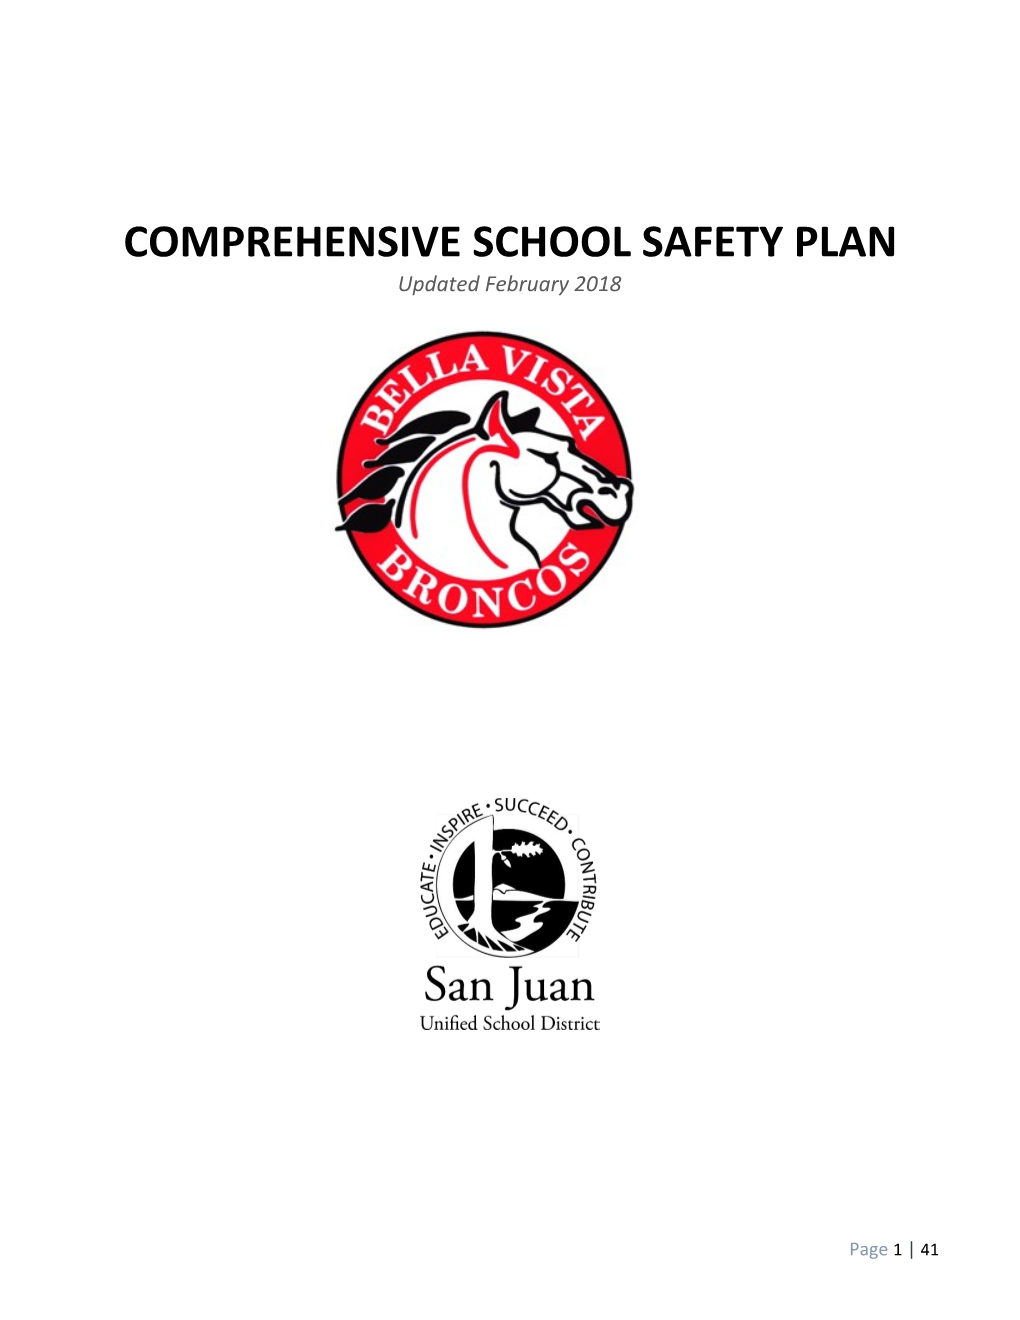 Comprehensive School Safety Plan